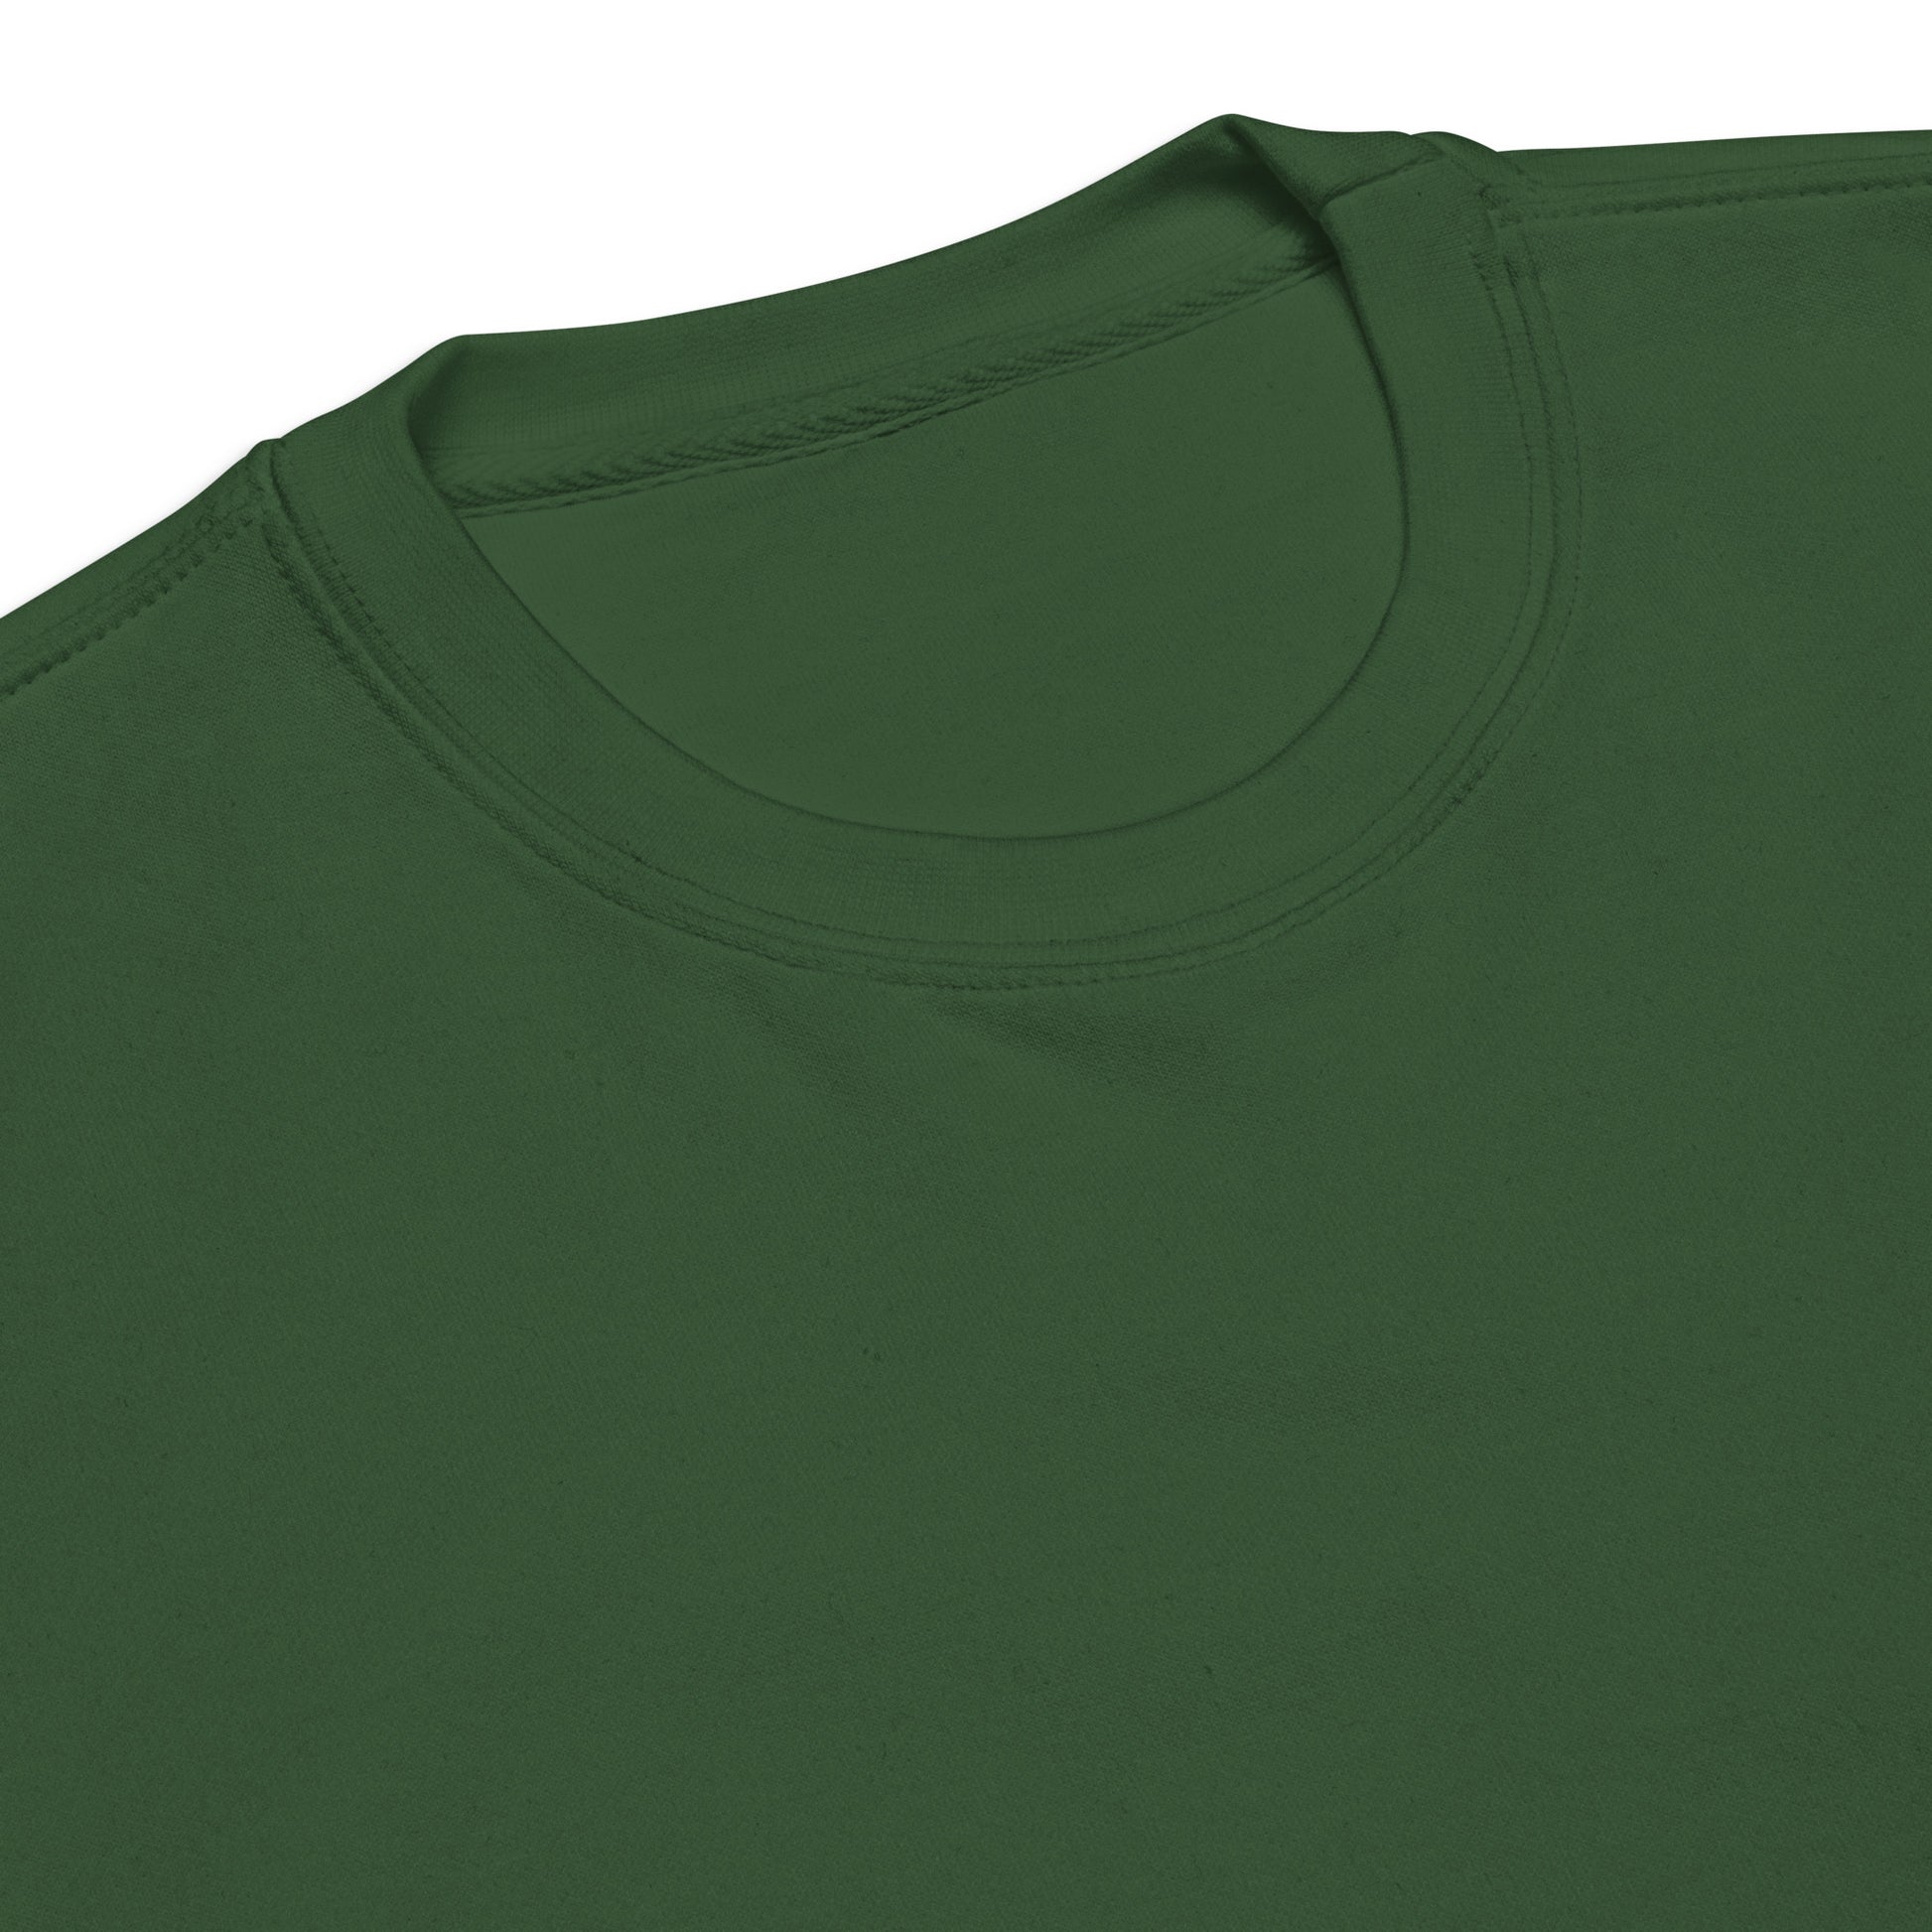 Forest Green Women's Premium Cotton Sweatshirt by Women's Premium Cotton Sweatshirt sold by Jain Yoga